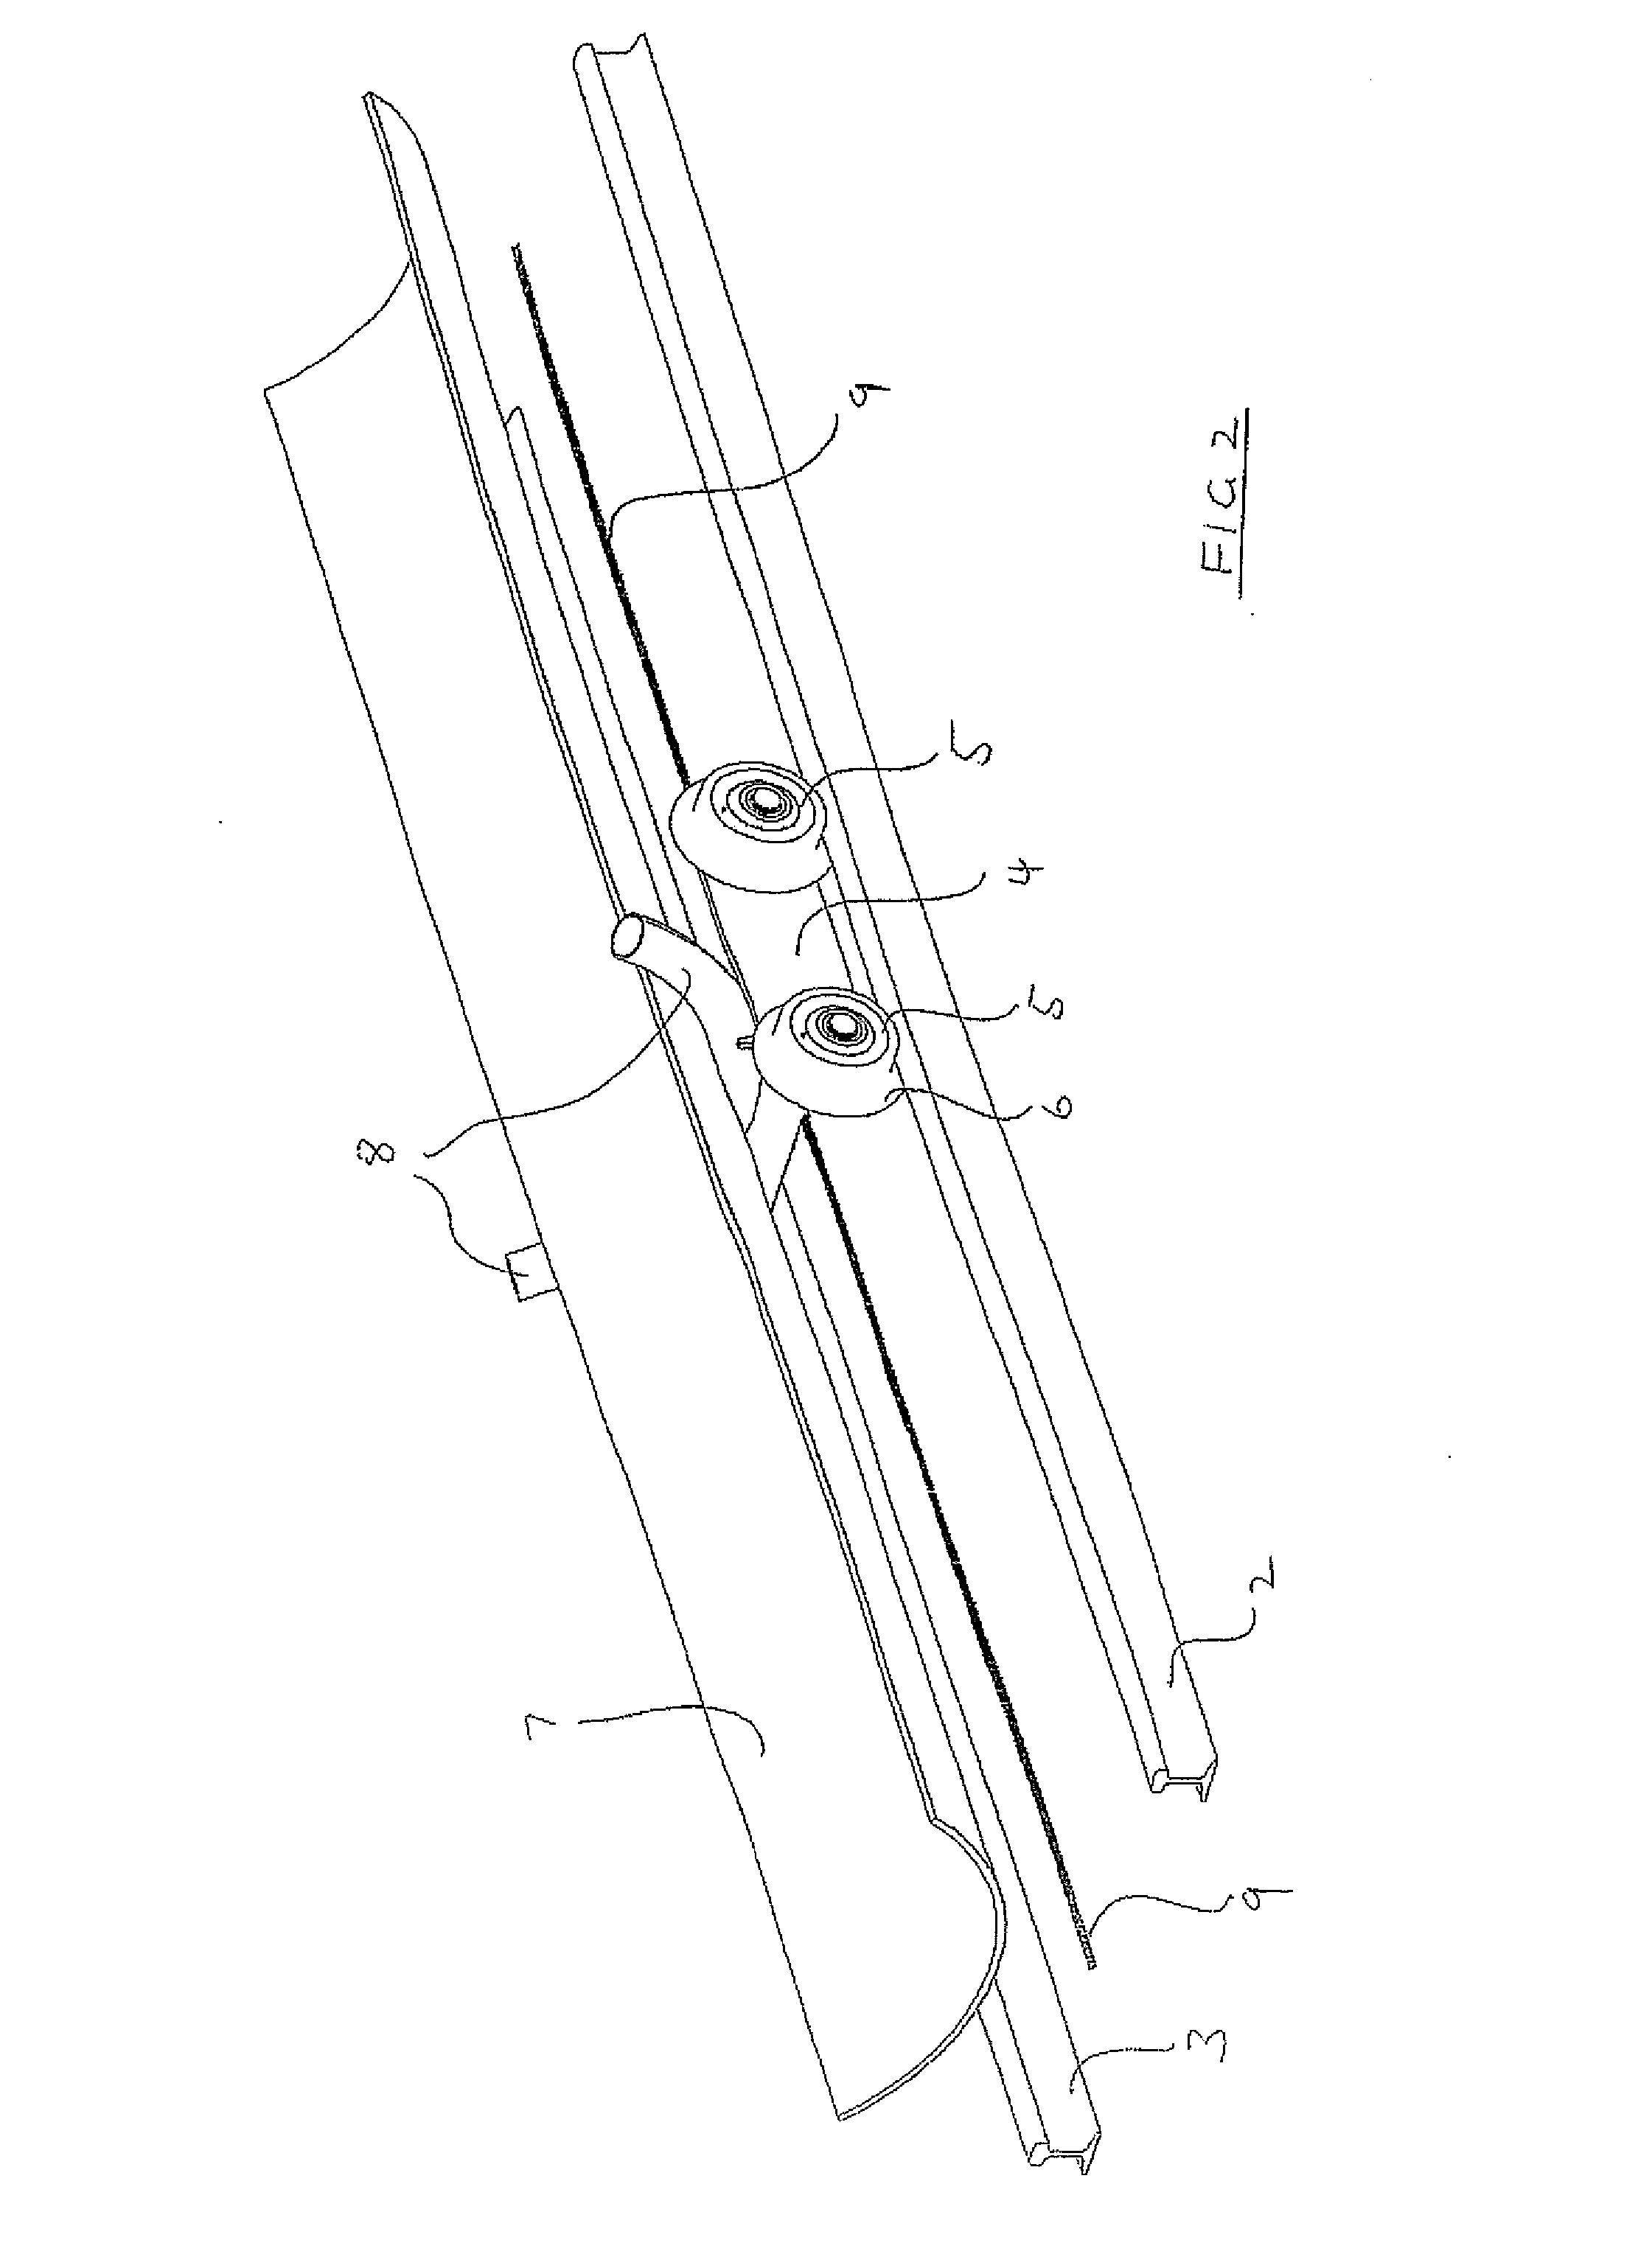 Rail conveyor system